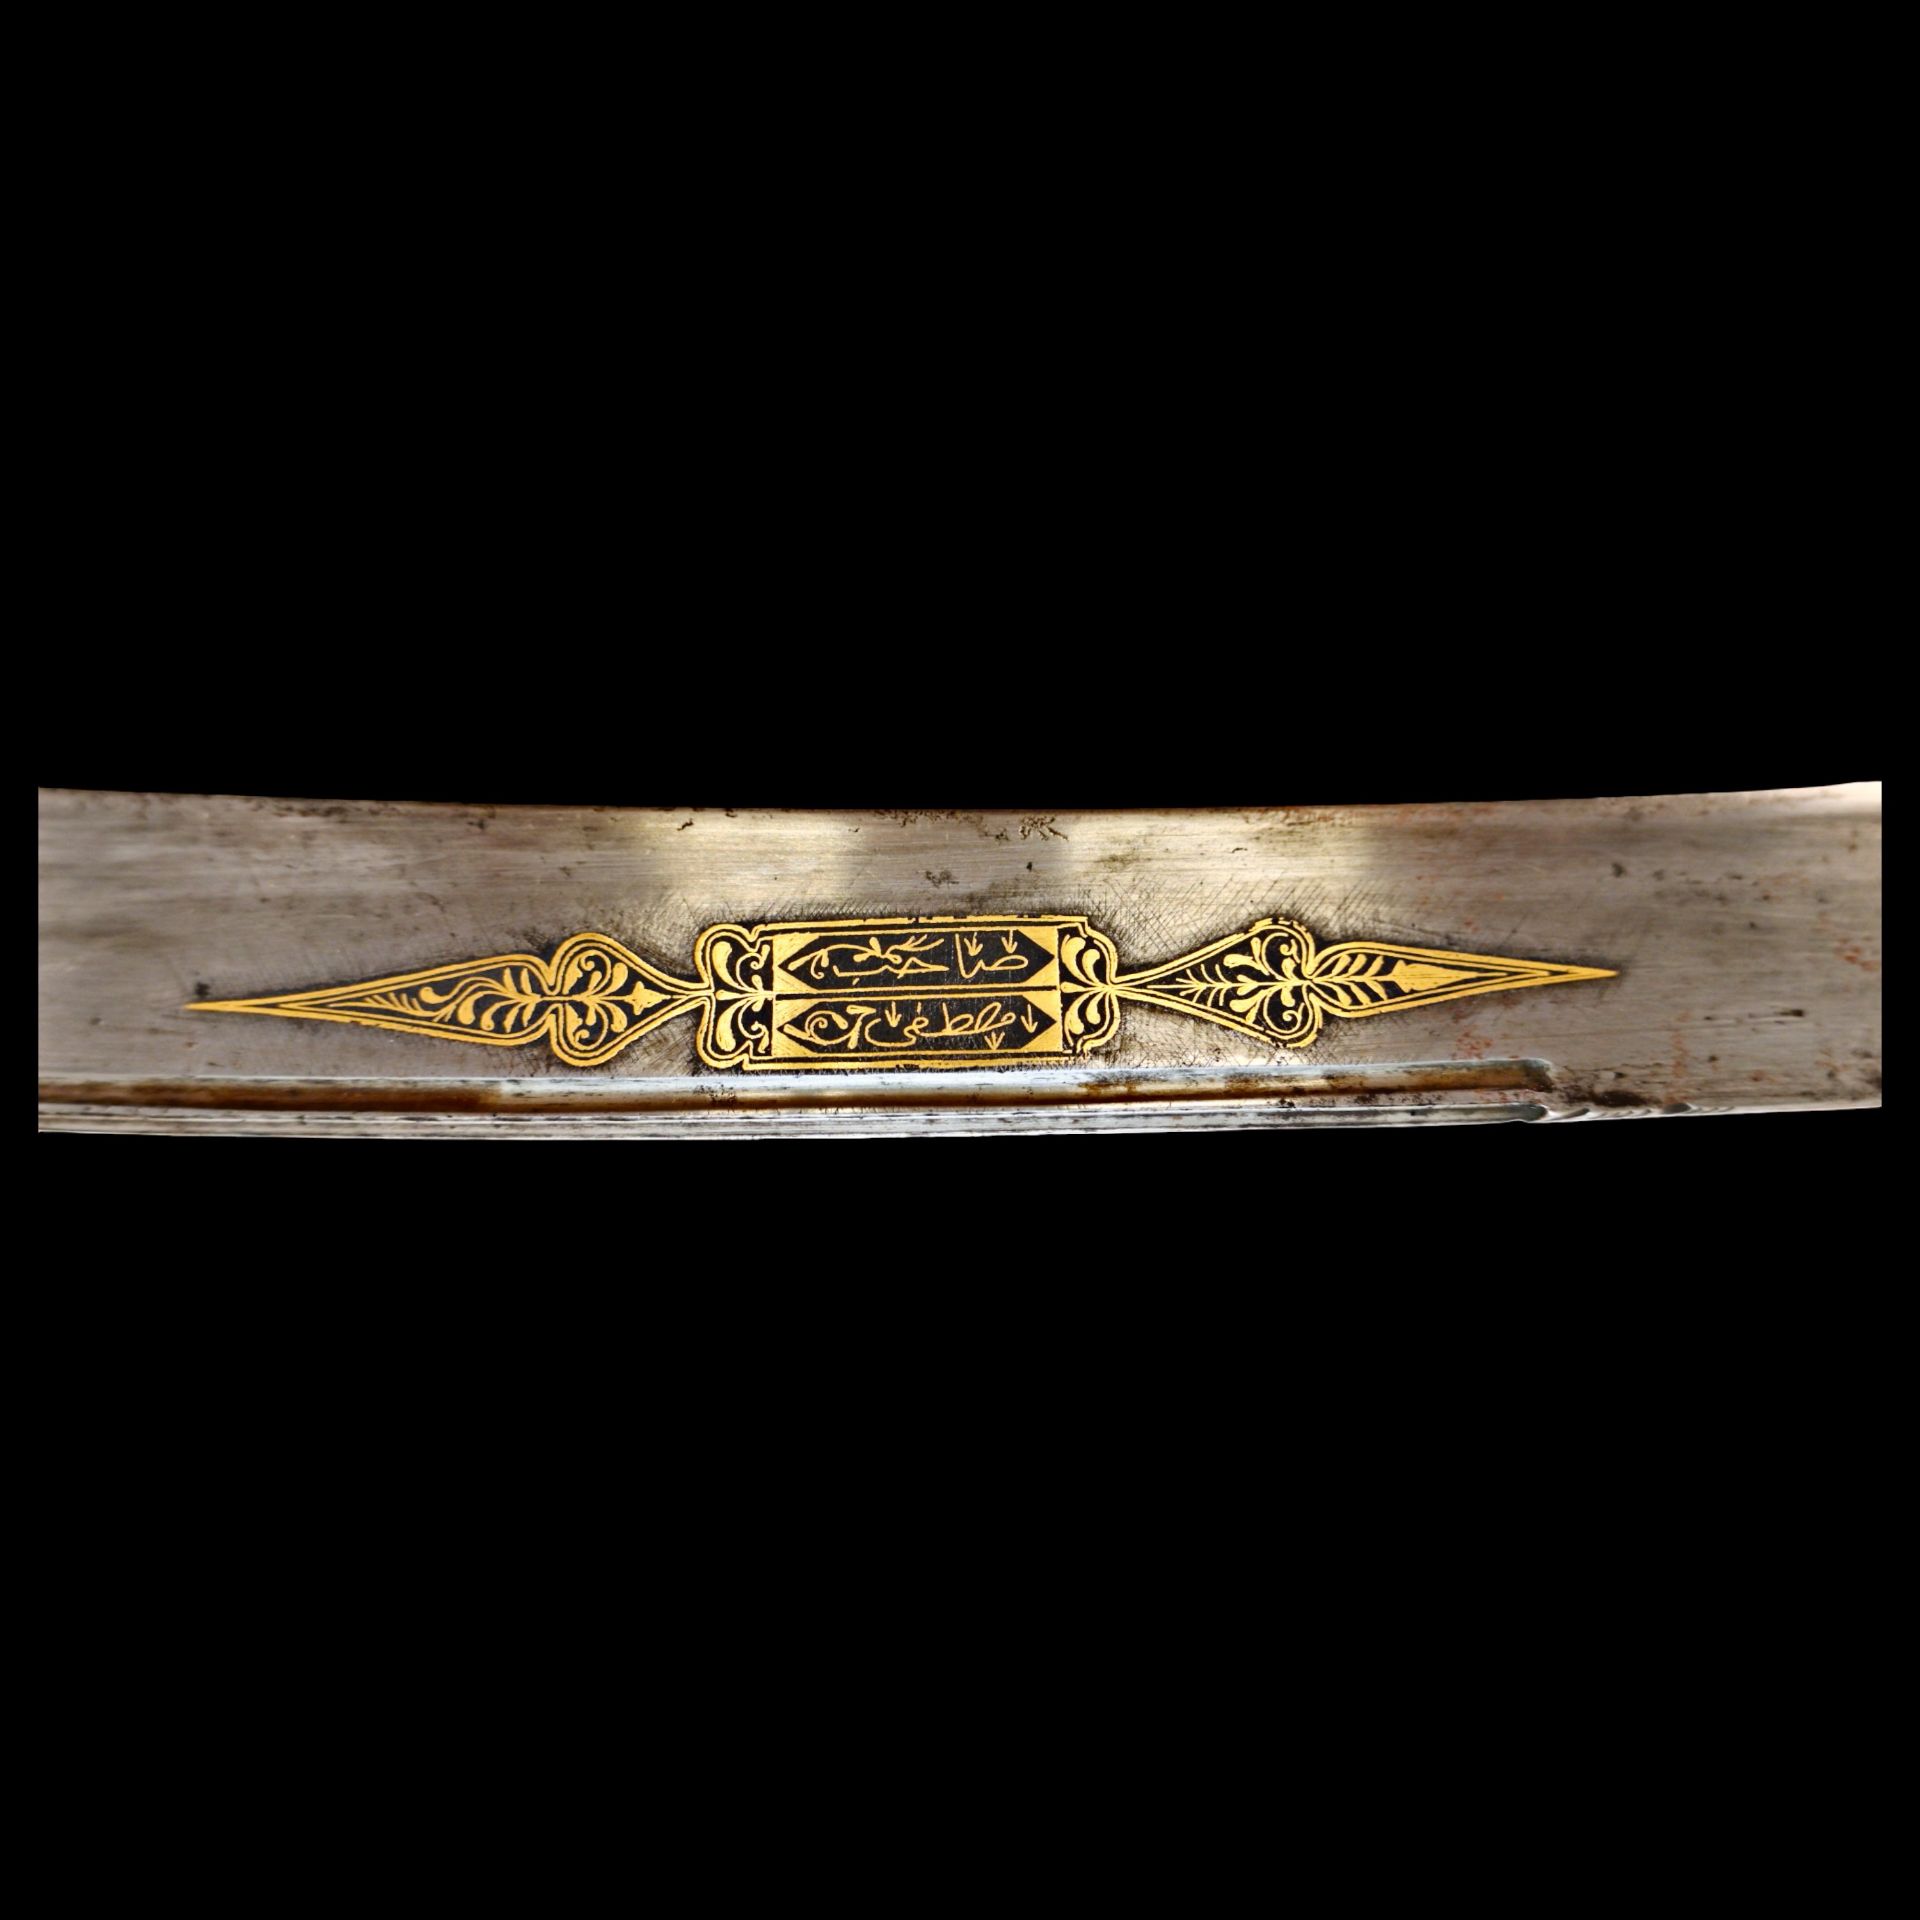 Magnificent Ottoman yatagan sword with bone hilt and gold kofgari on the blade, 1823. - Image 27 of 32